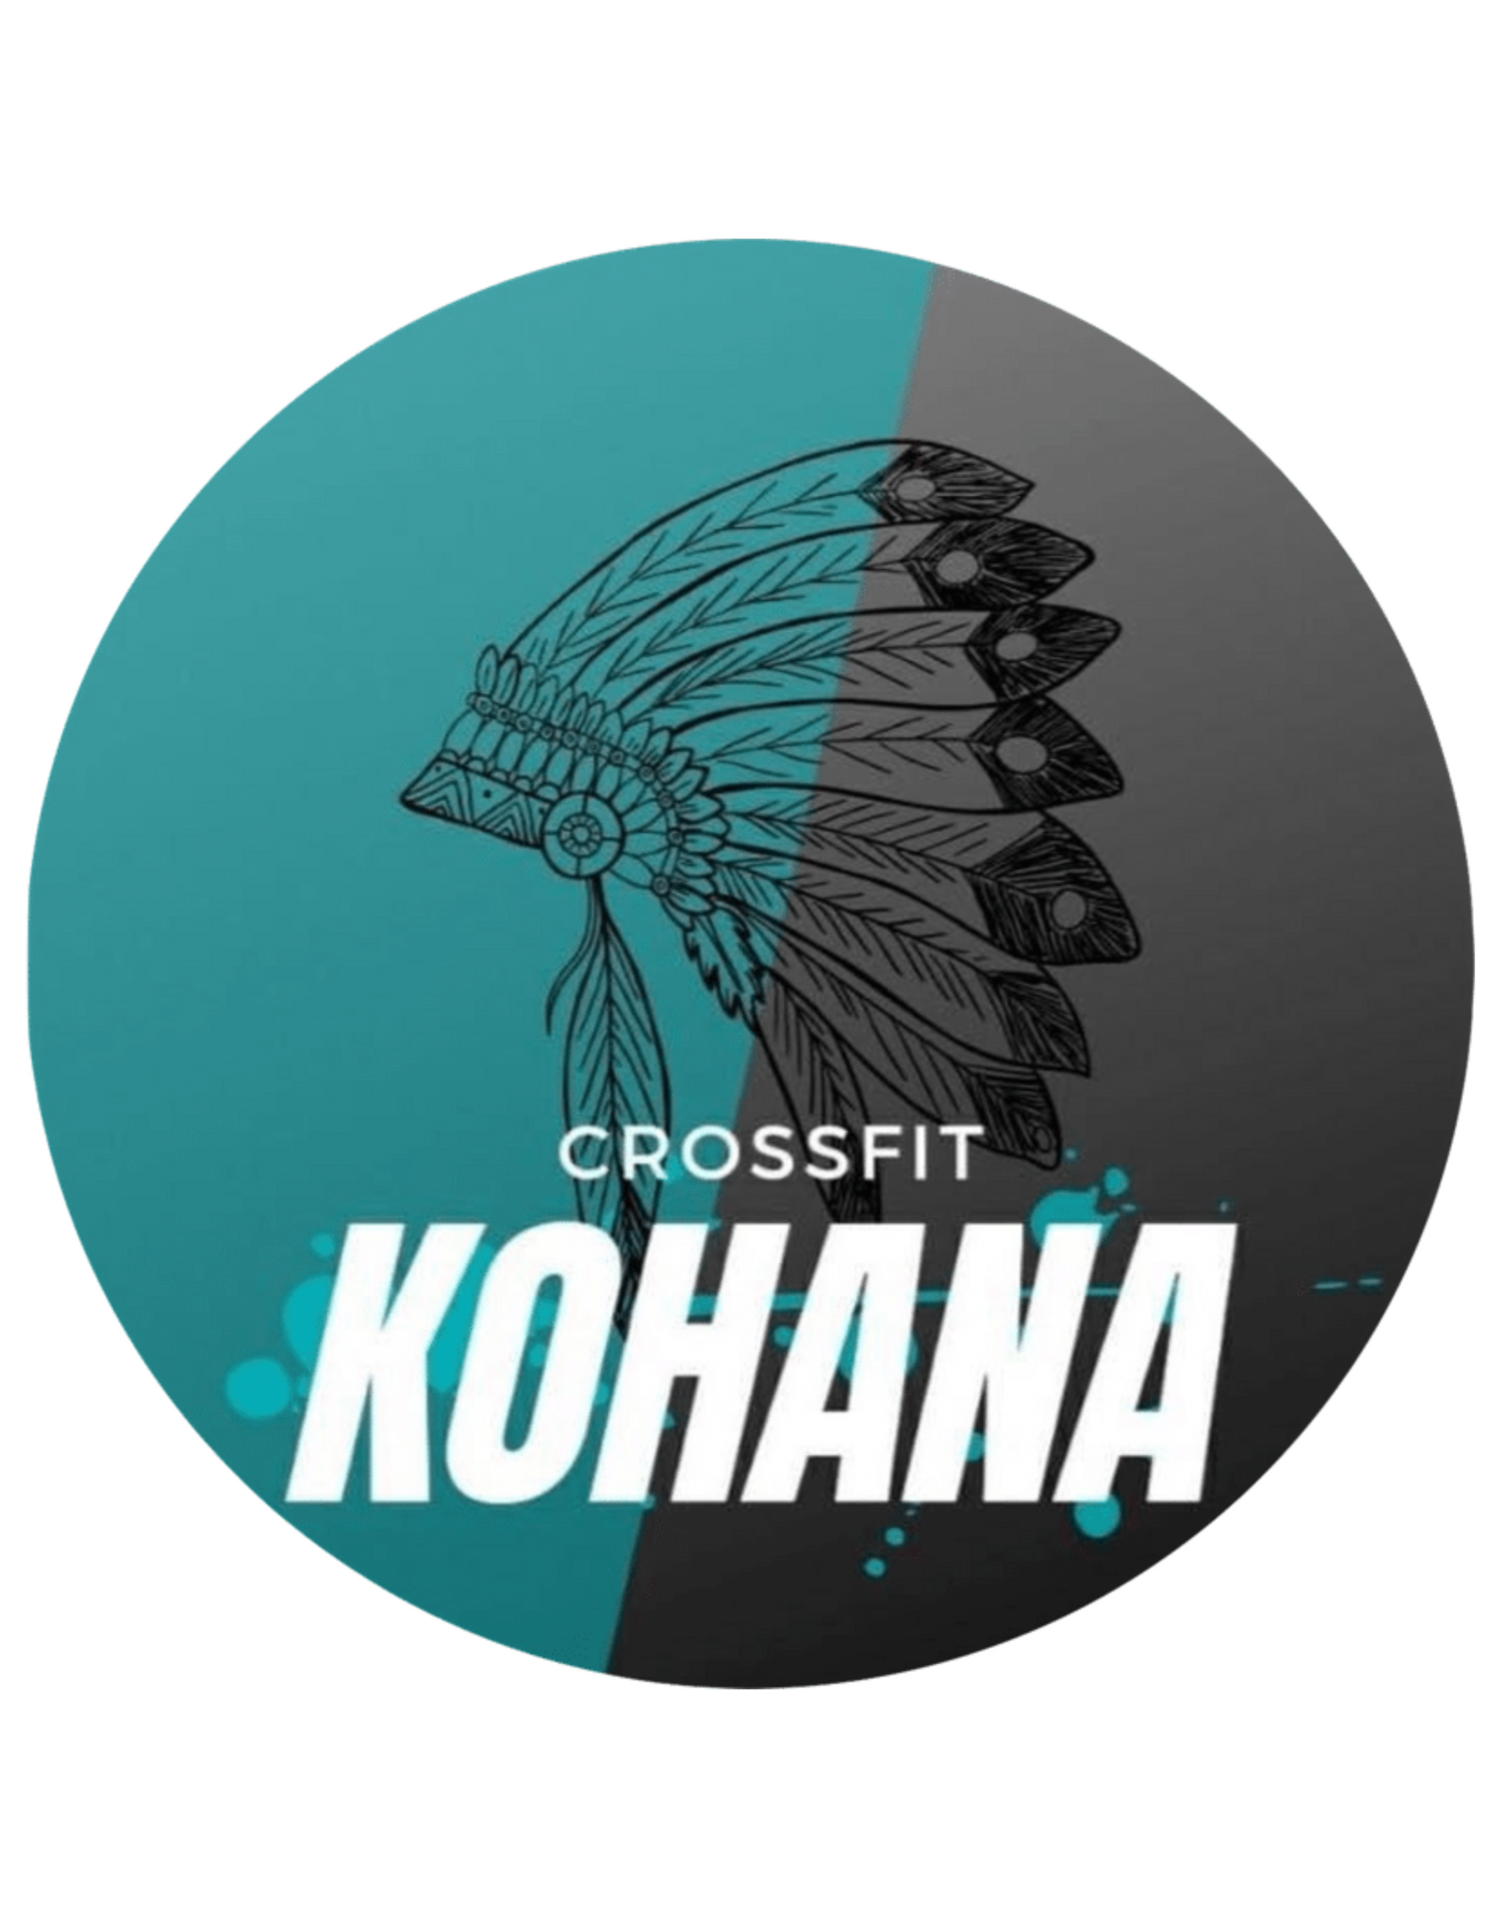 CrossFit Kohana